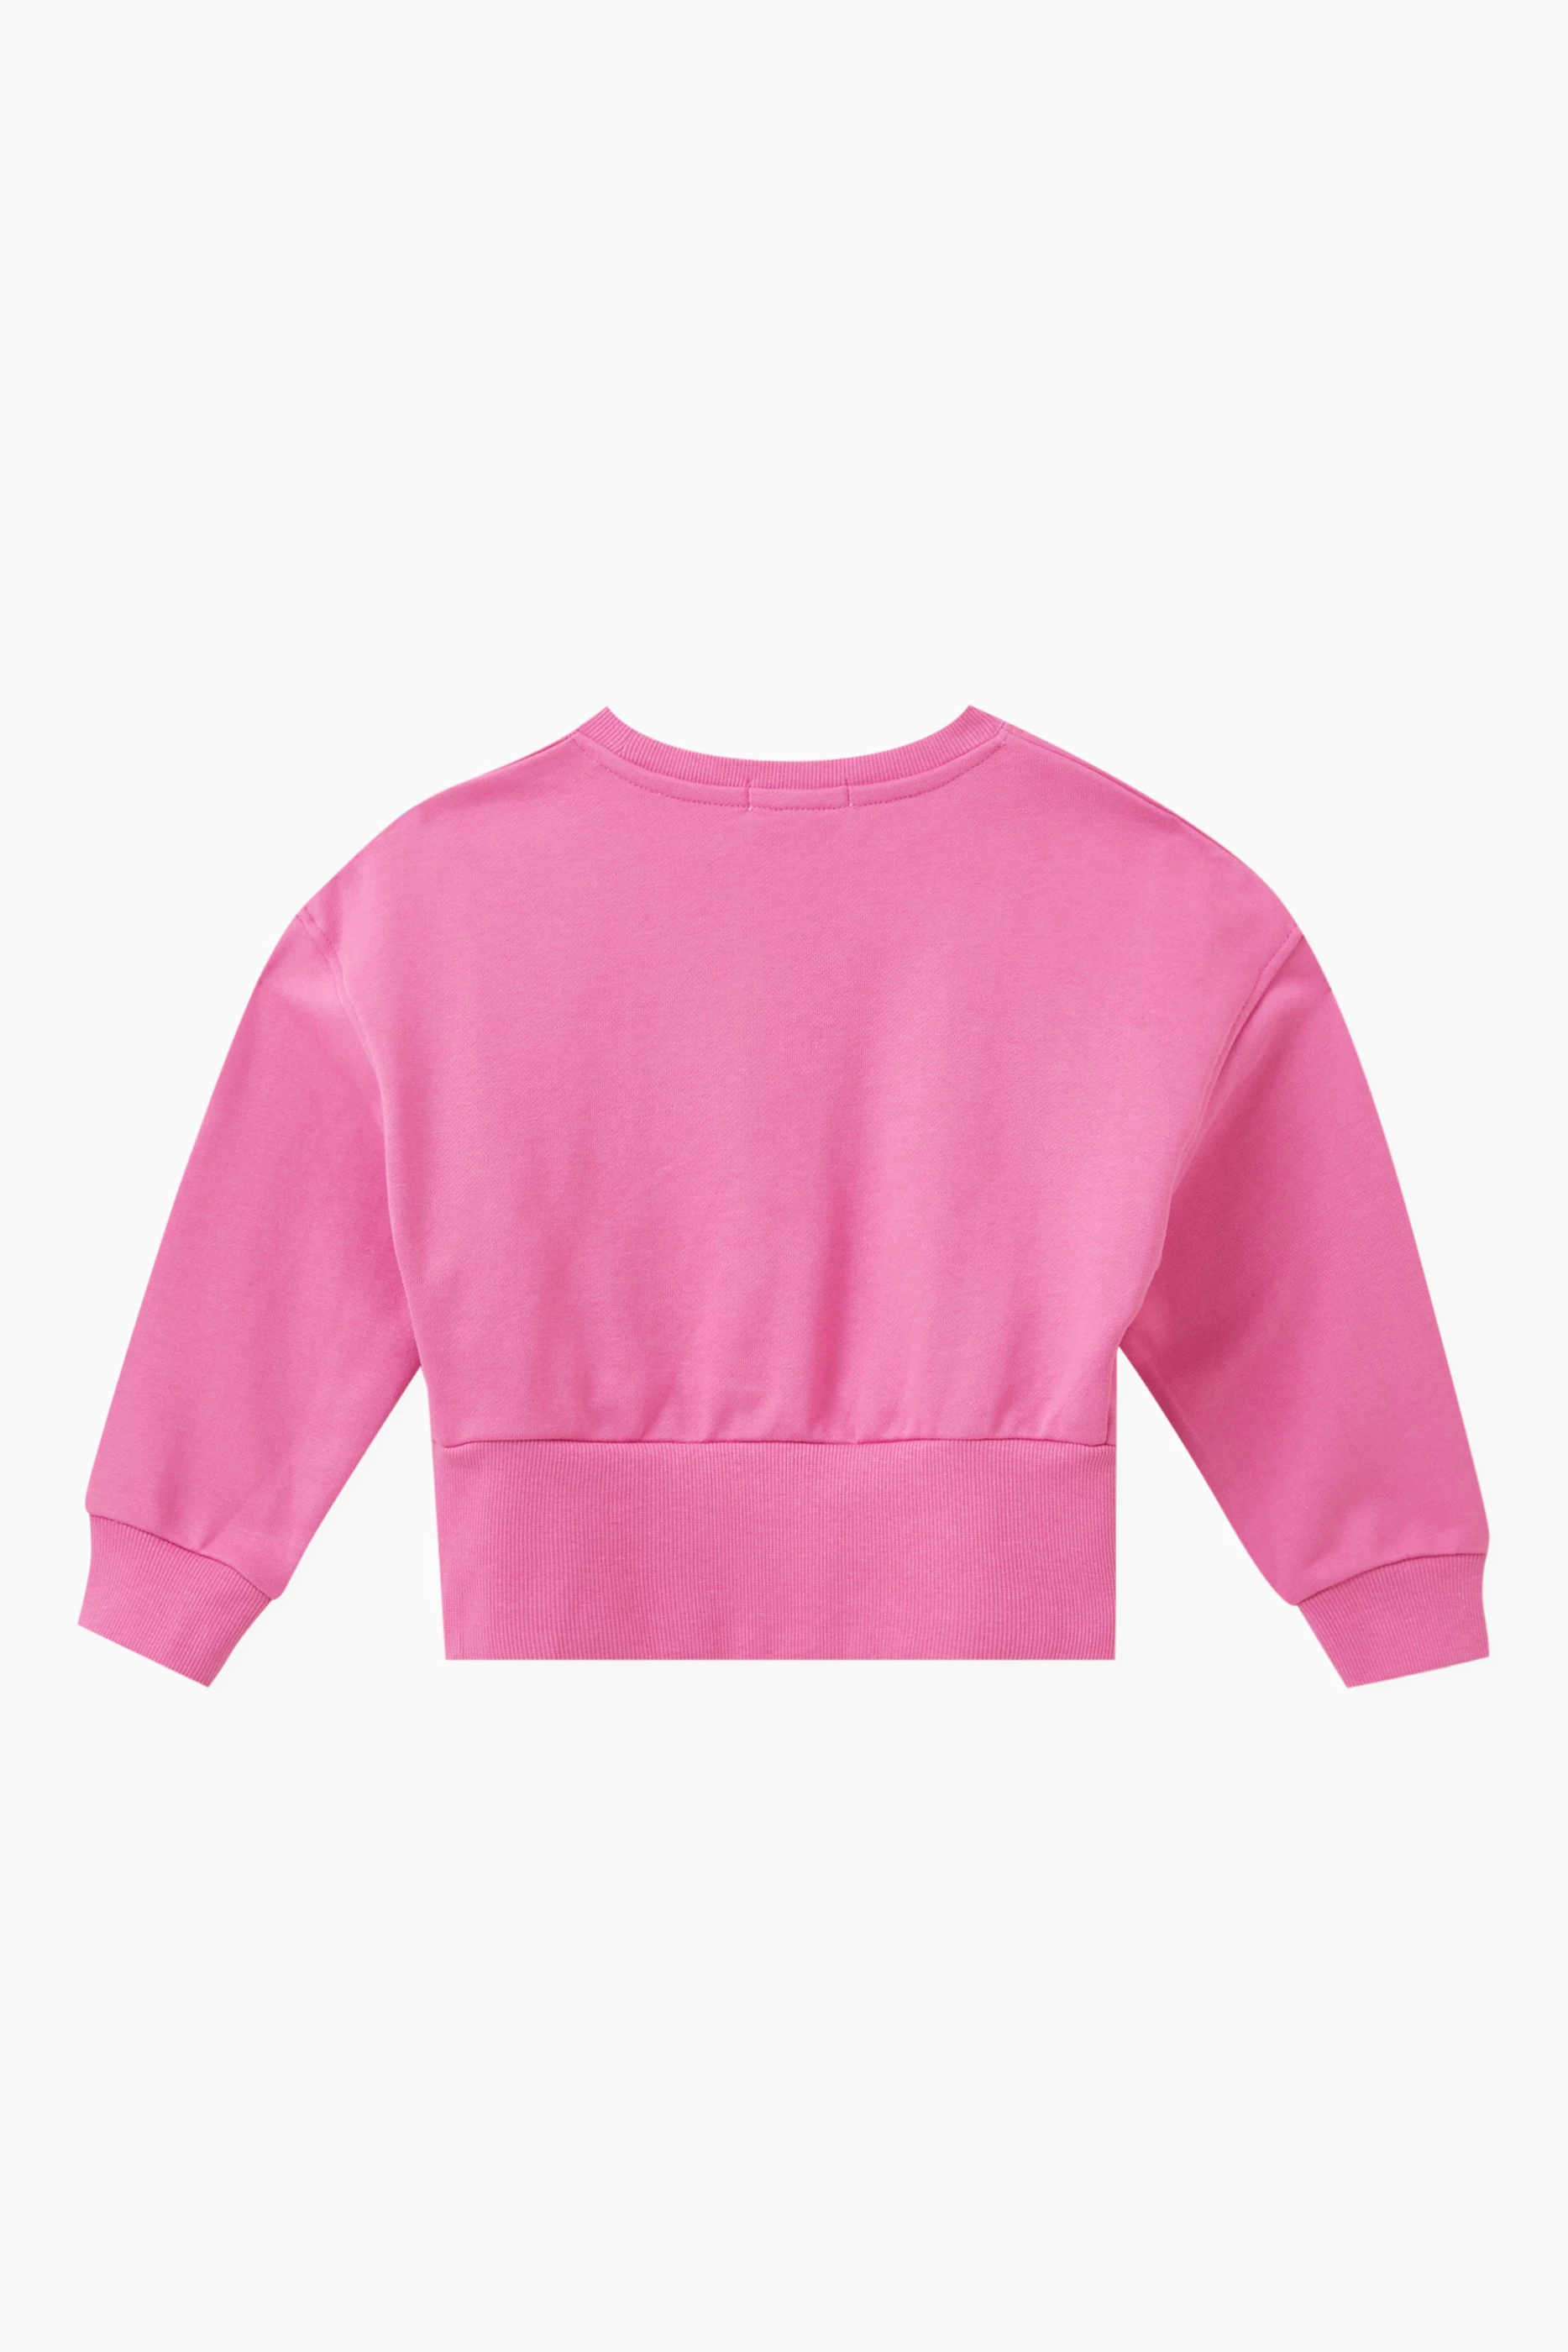 Calvin Klein Womens Open Stitch Pullover Sweater, Pink, Medium : Buy Online  at Best Price in KSA - Souq is now : Fashion